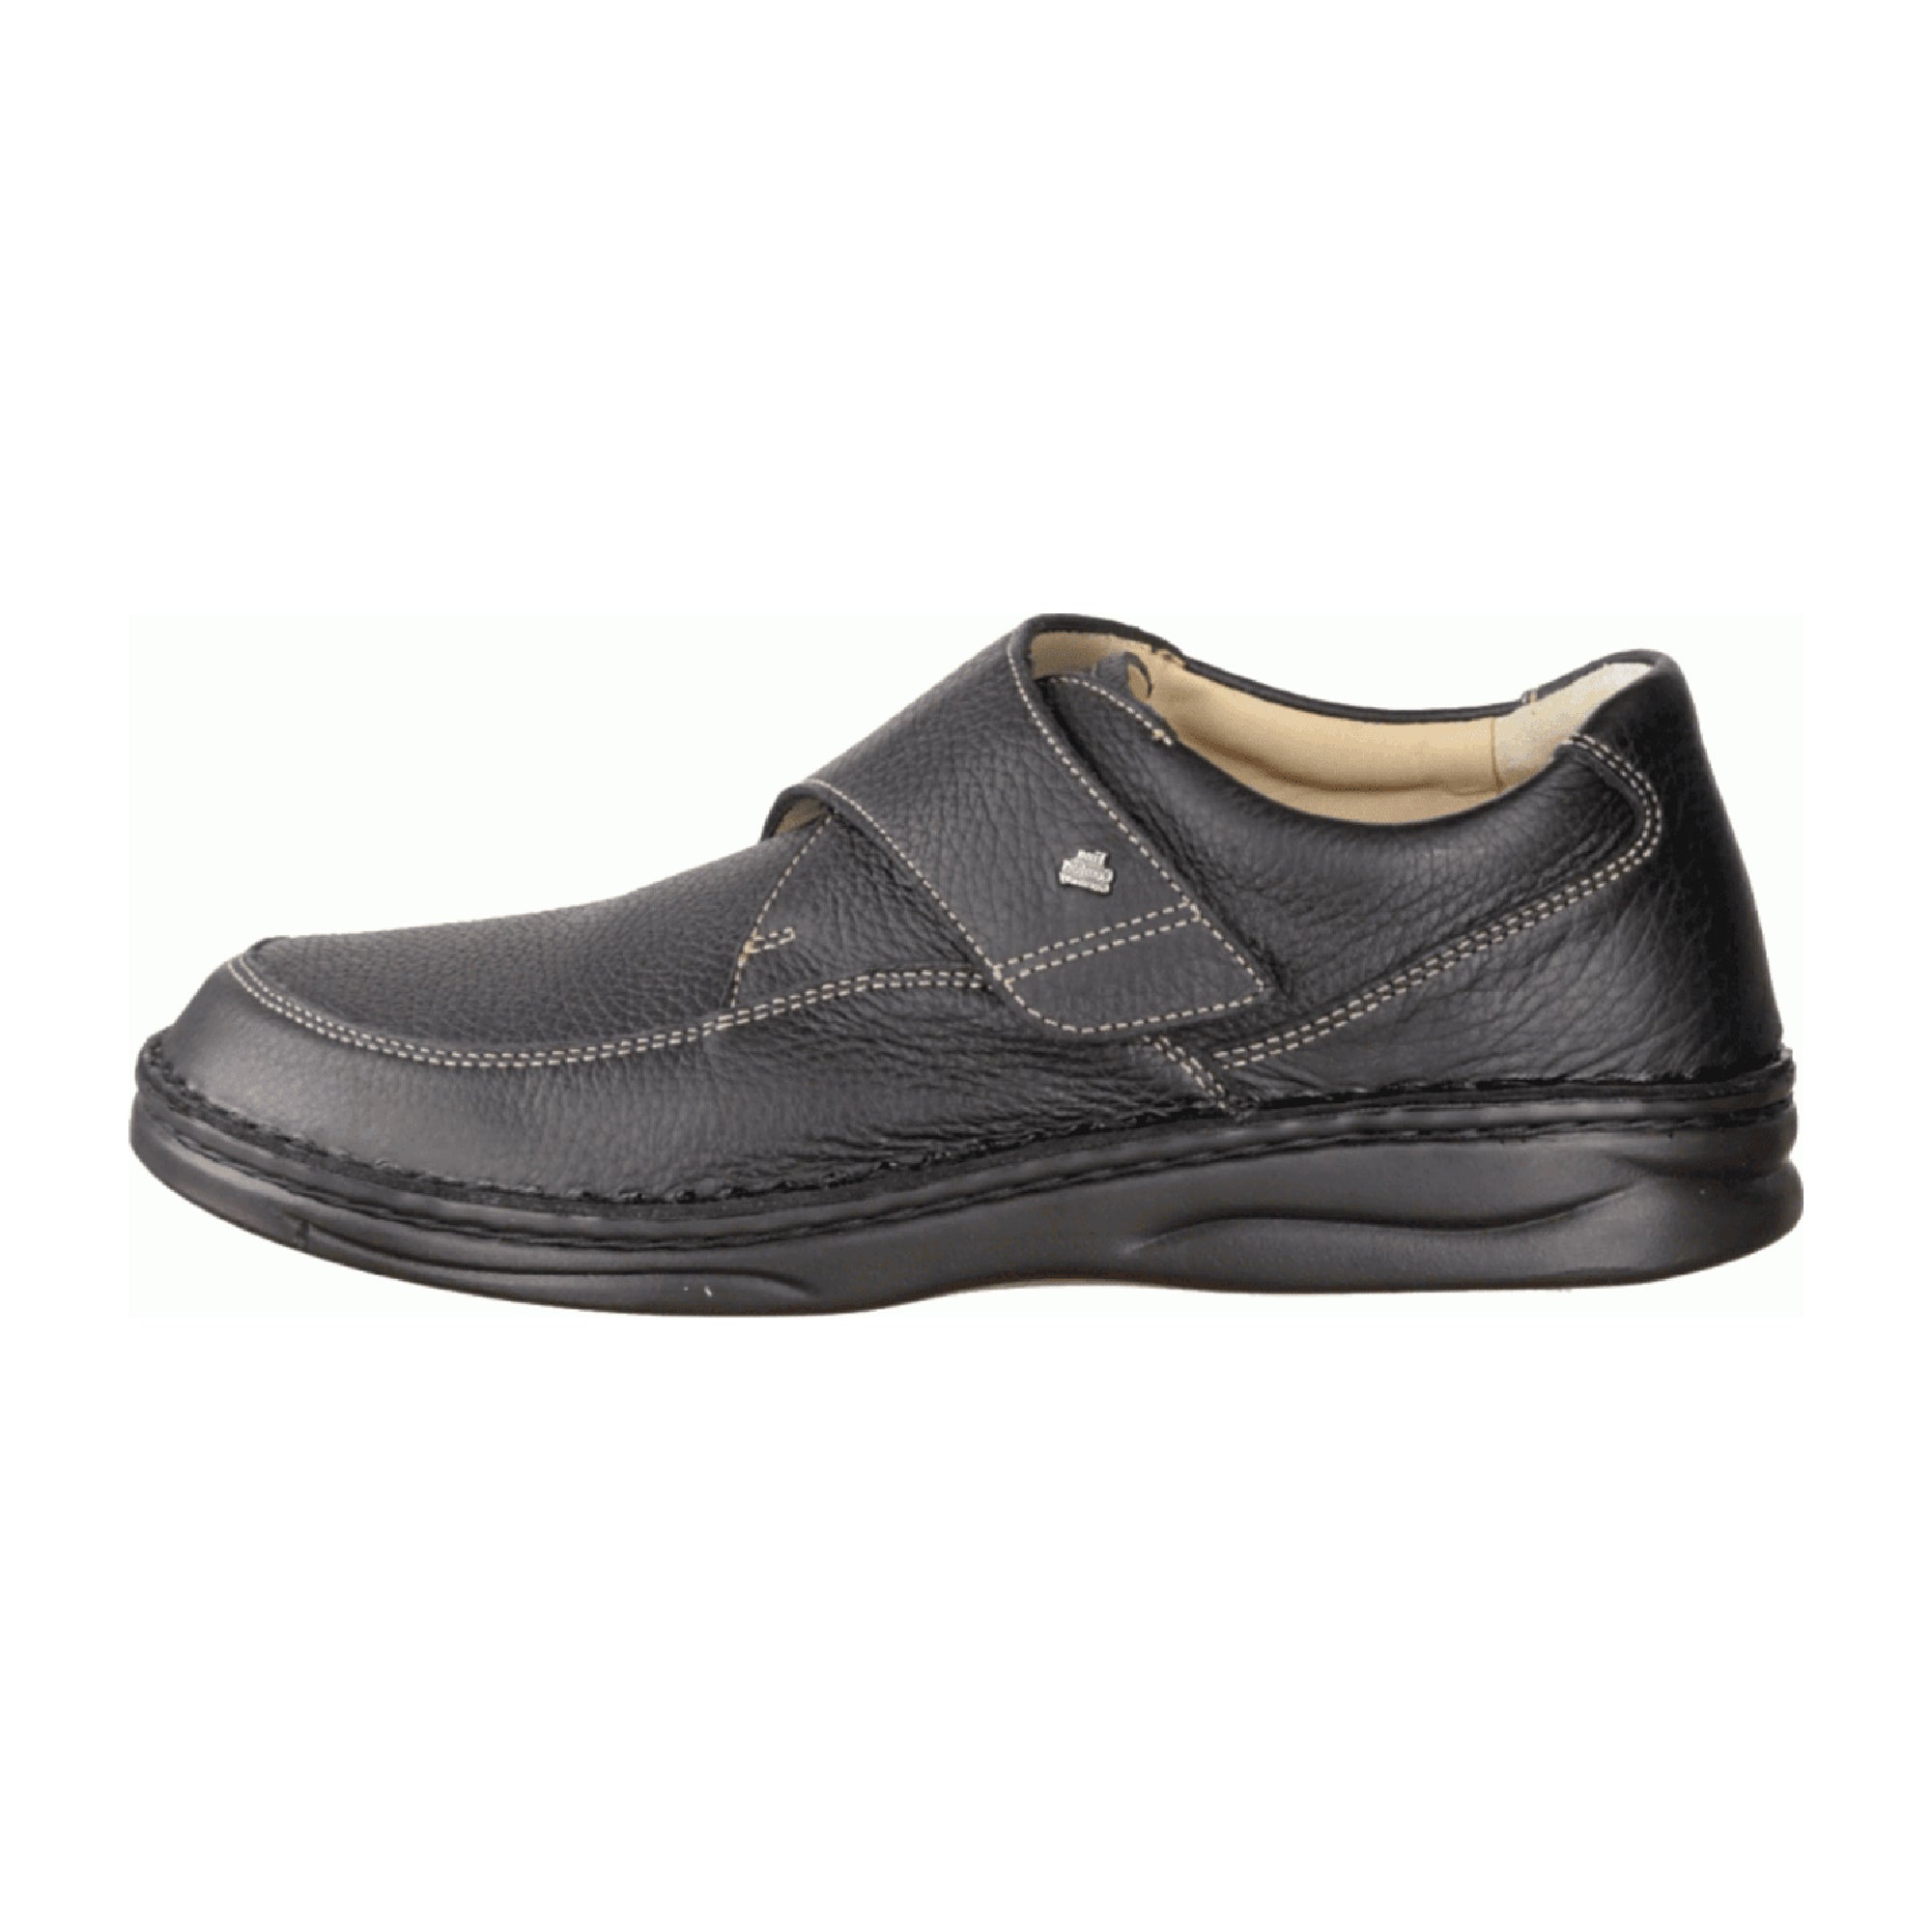 Finn Comfort Braga Men's Black Leather Shoes - Comfortable & Stylish